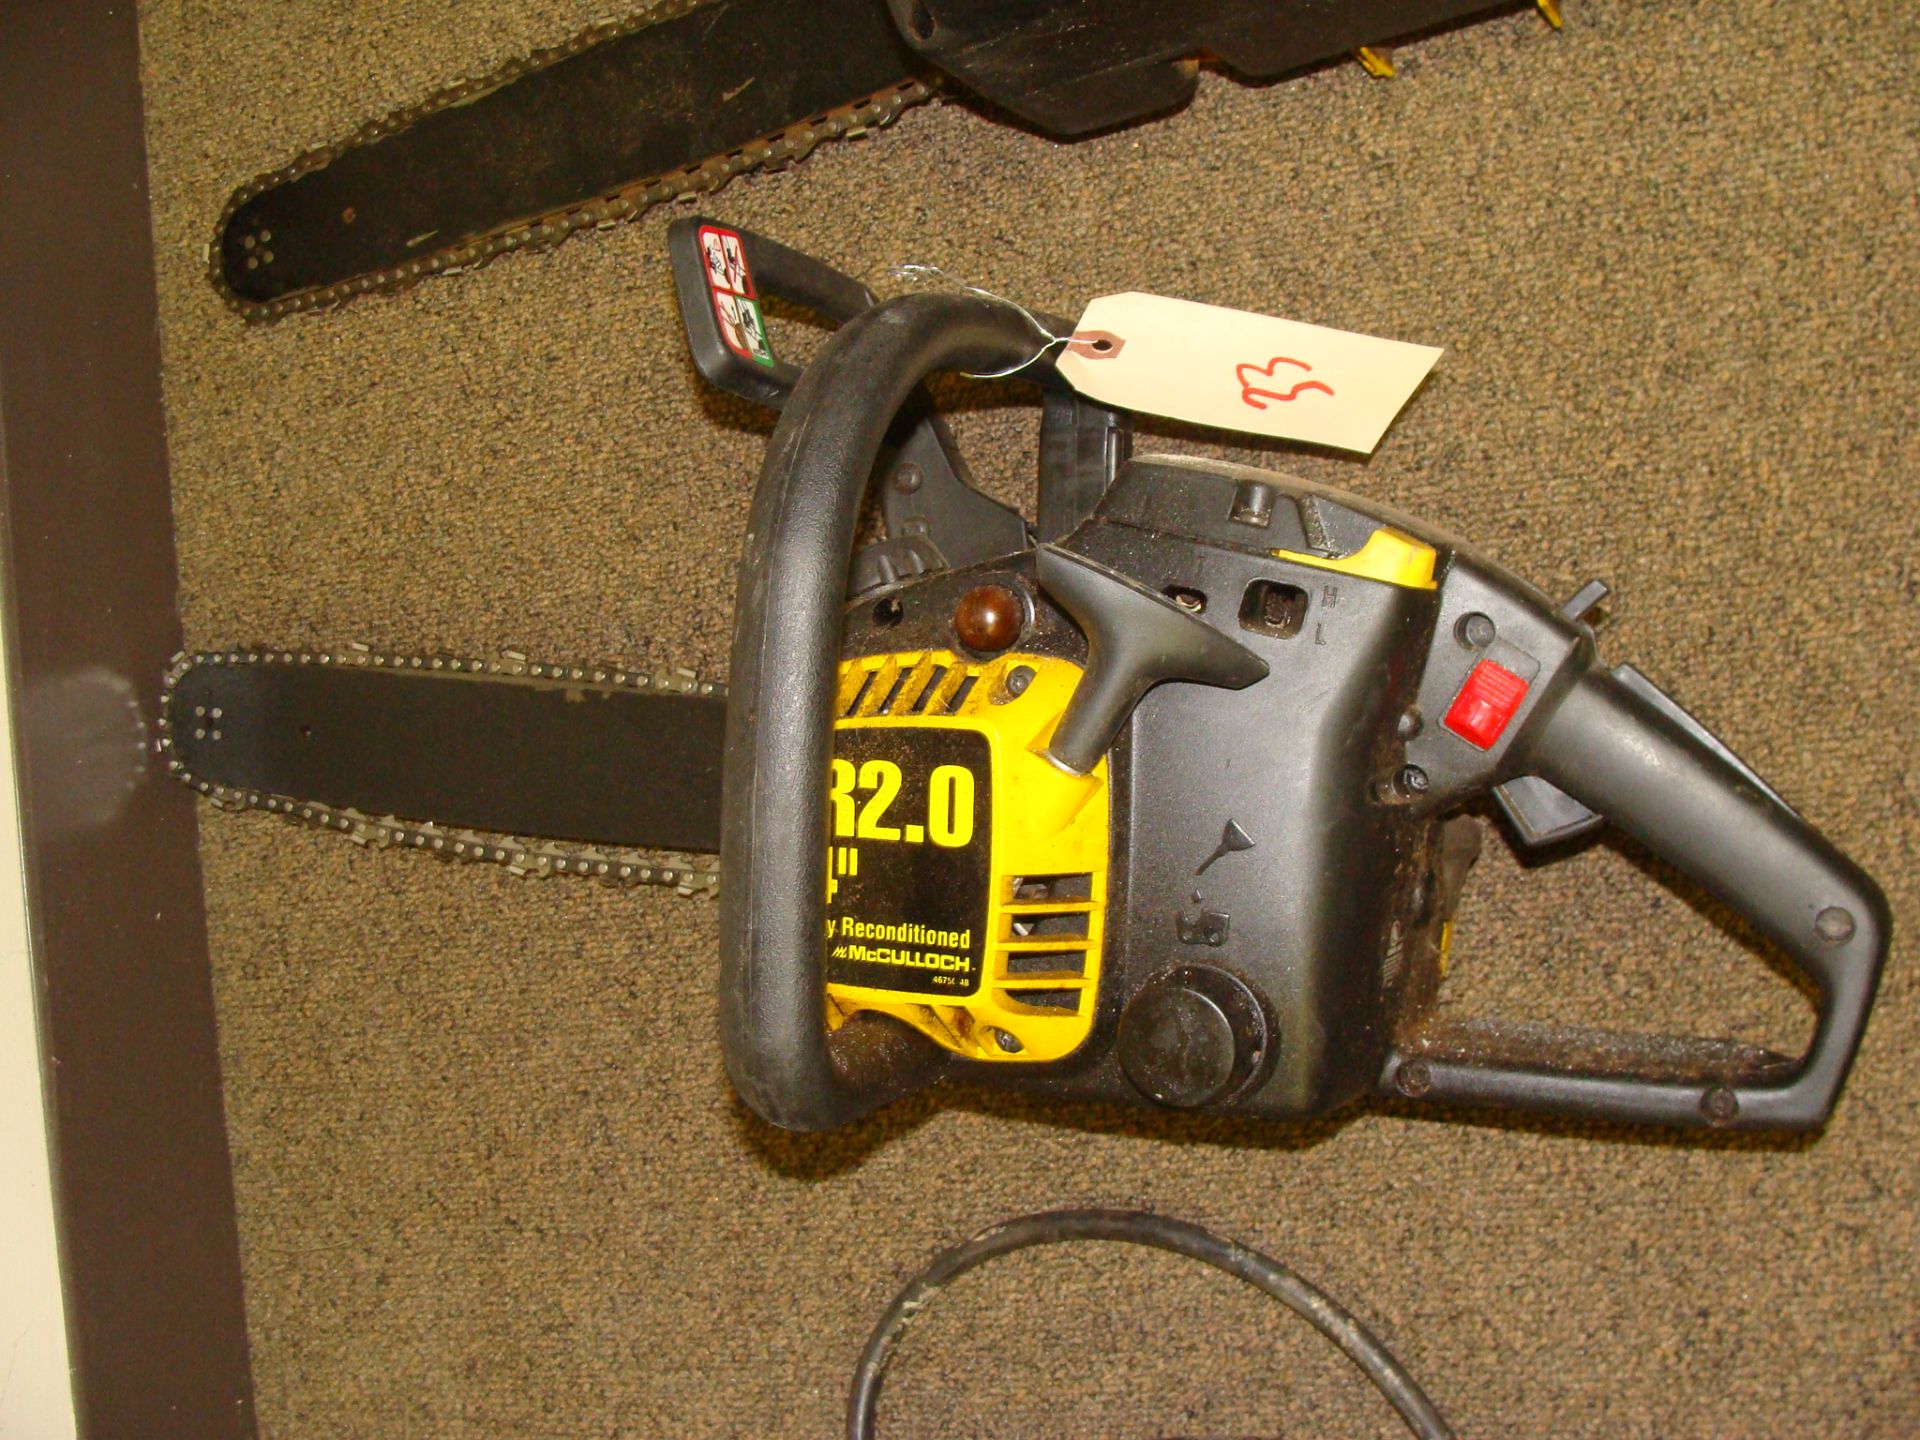 Mcculloch 14 inch gas chainsaw